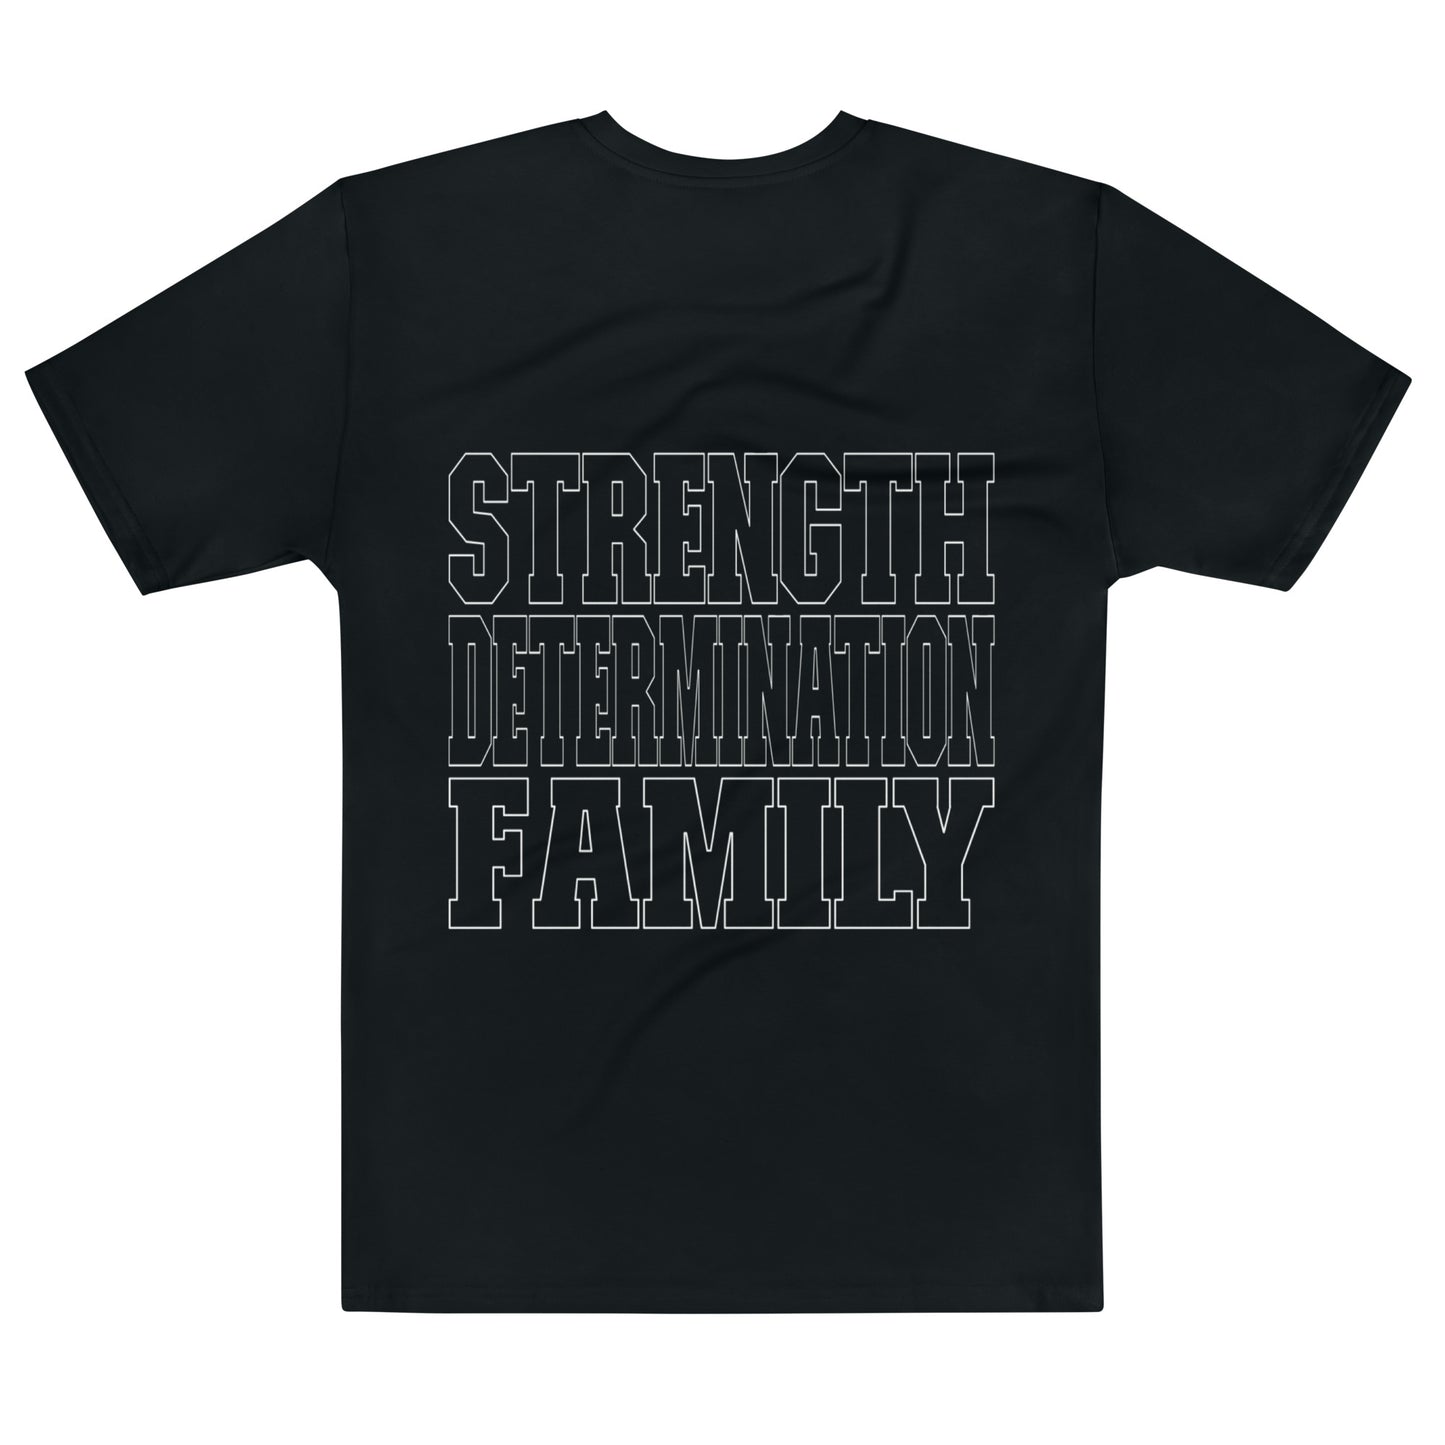 Football "Strength, Determination, Family" T-shirt